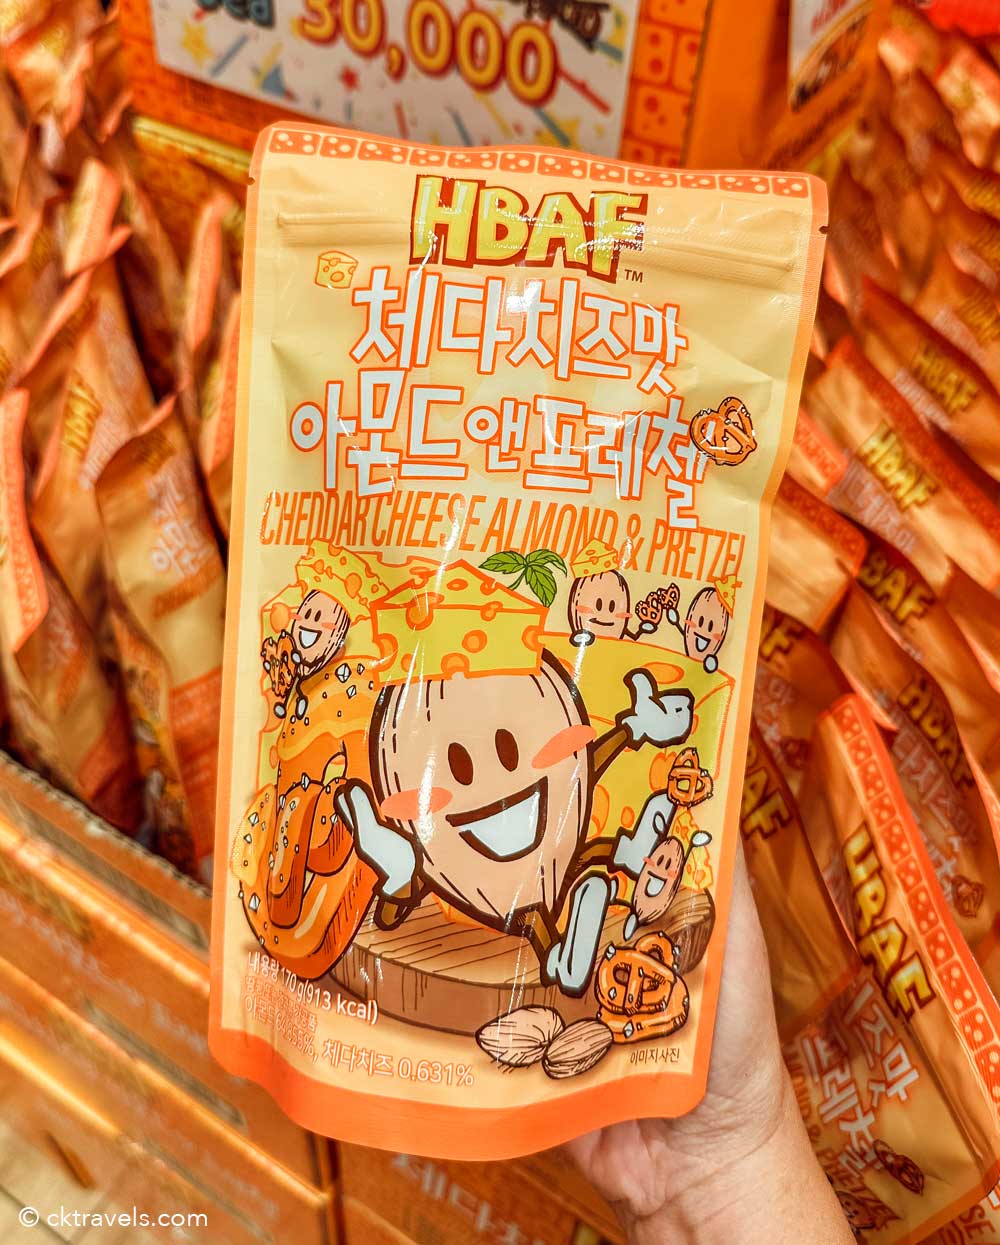 HBAF cheddar cheese Almonds and pretzels south korea